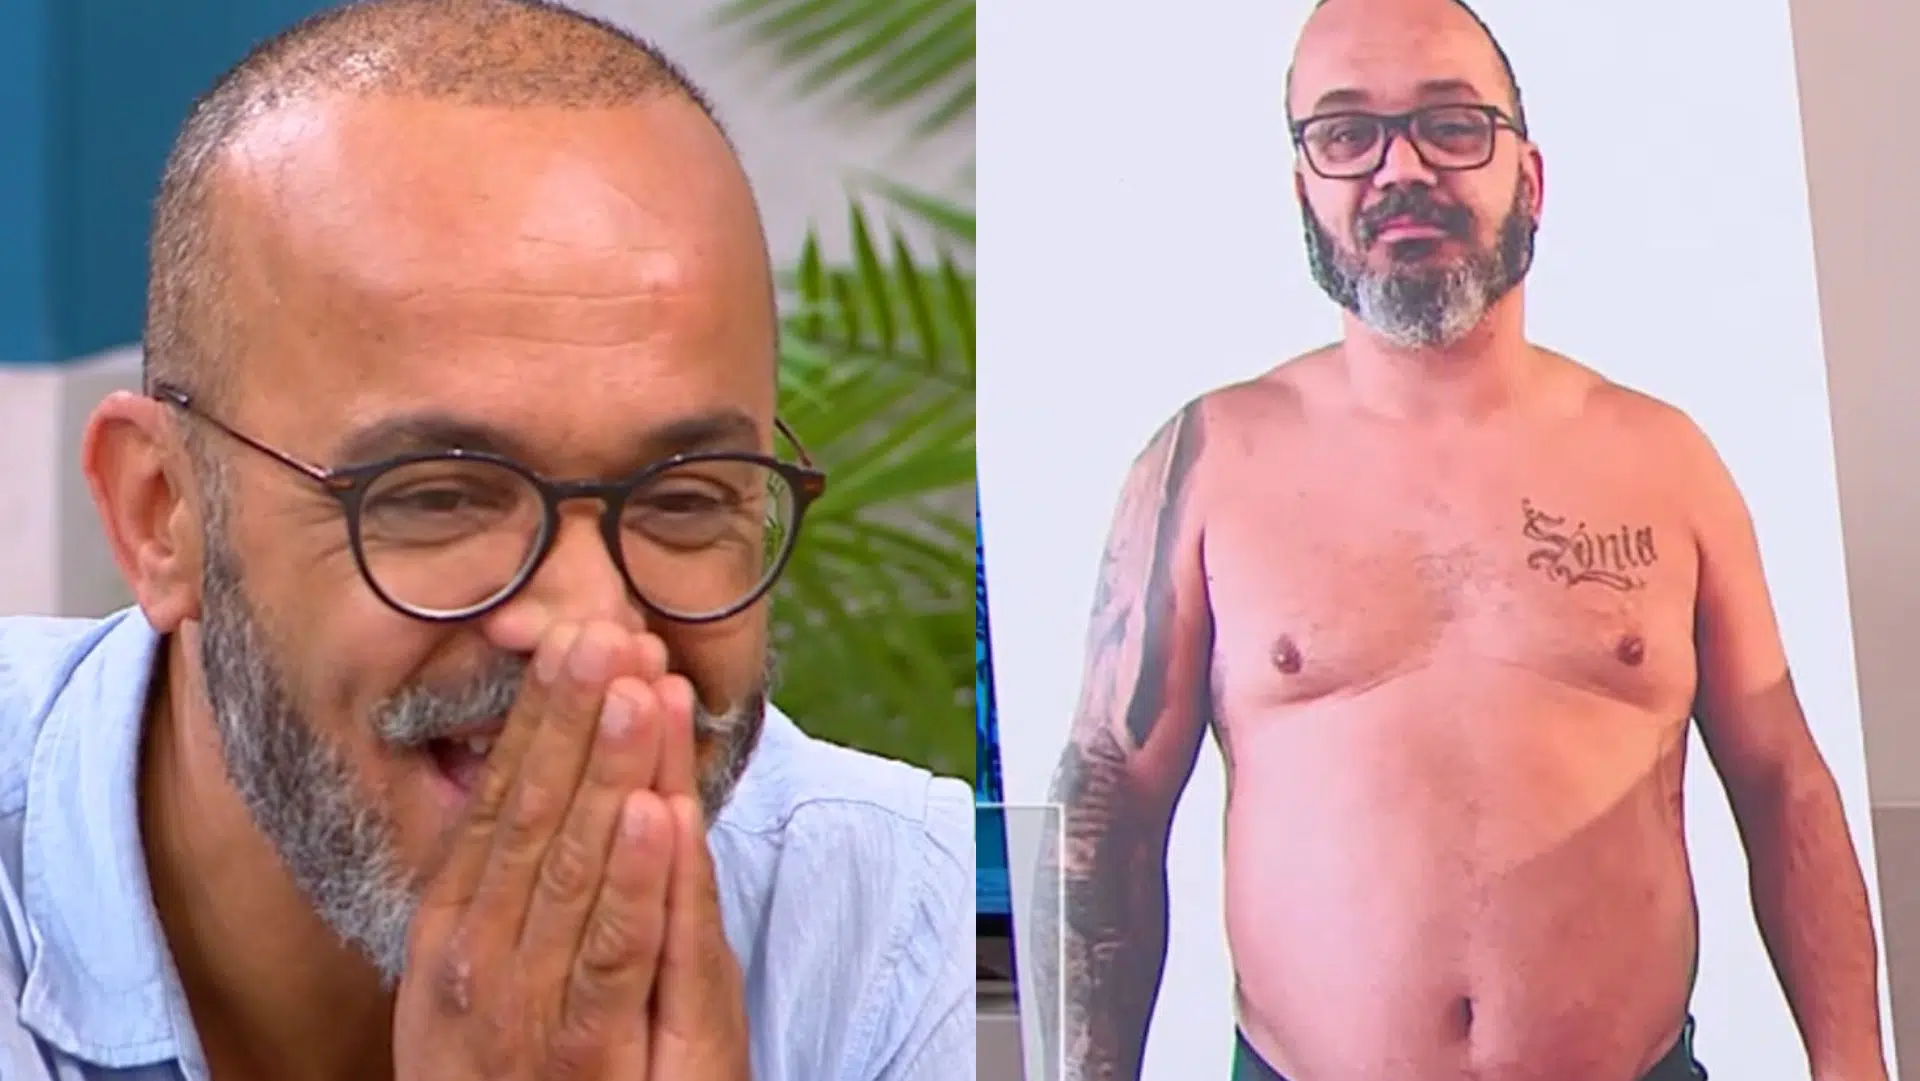 Fernando Rocha Perde Peso